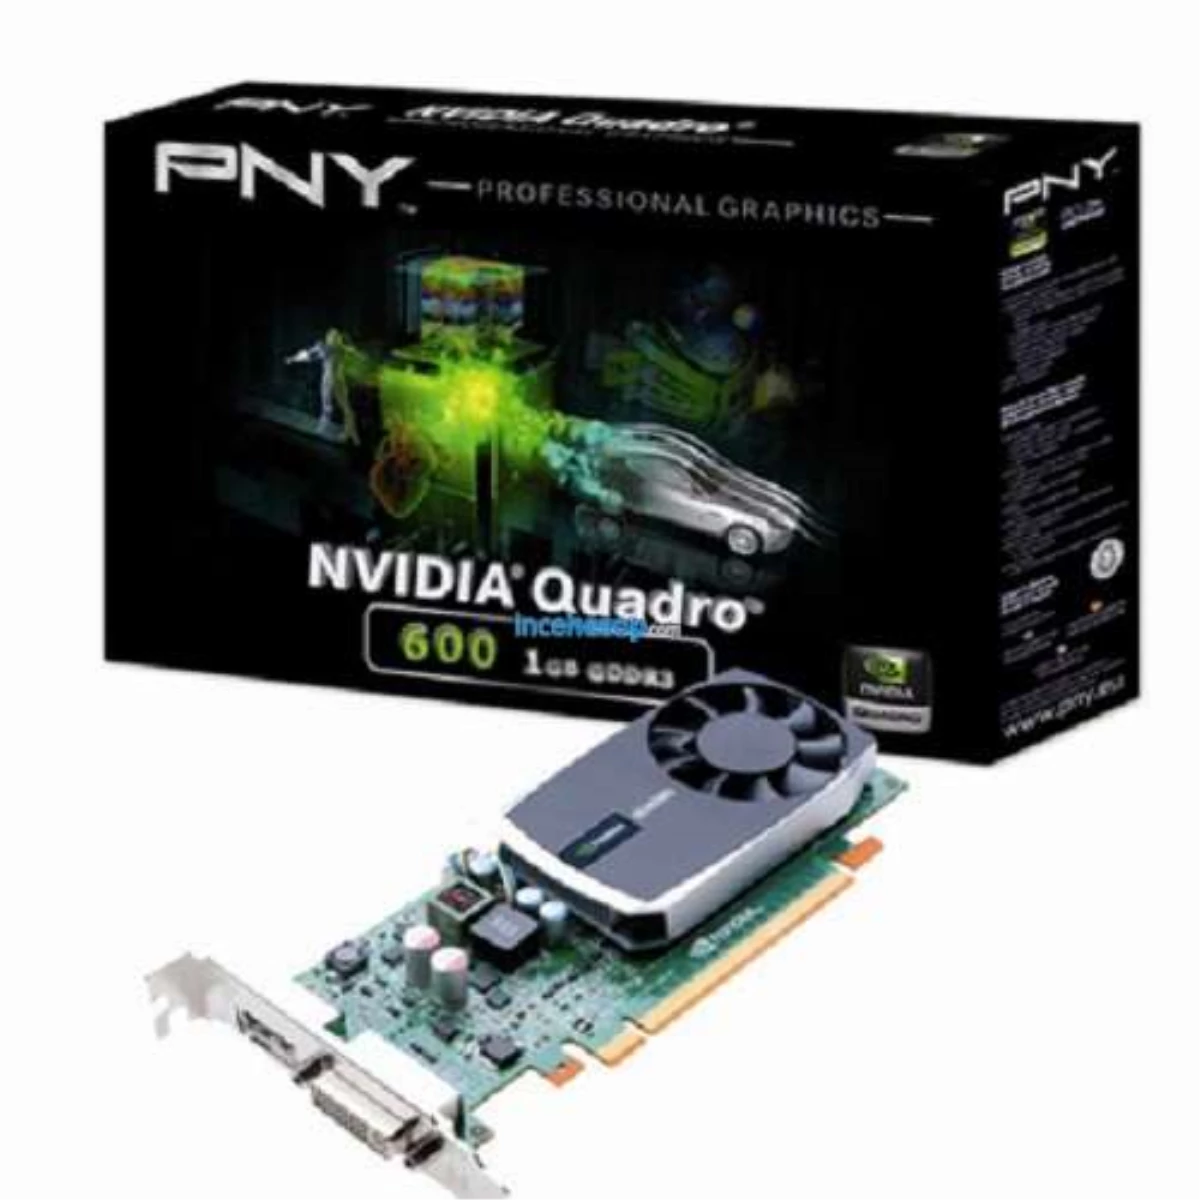 Pny Quadro Vcq600-Pb 1gb Gddr3 128 Bit Dvı+dp(Lp)